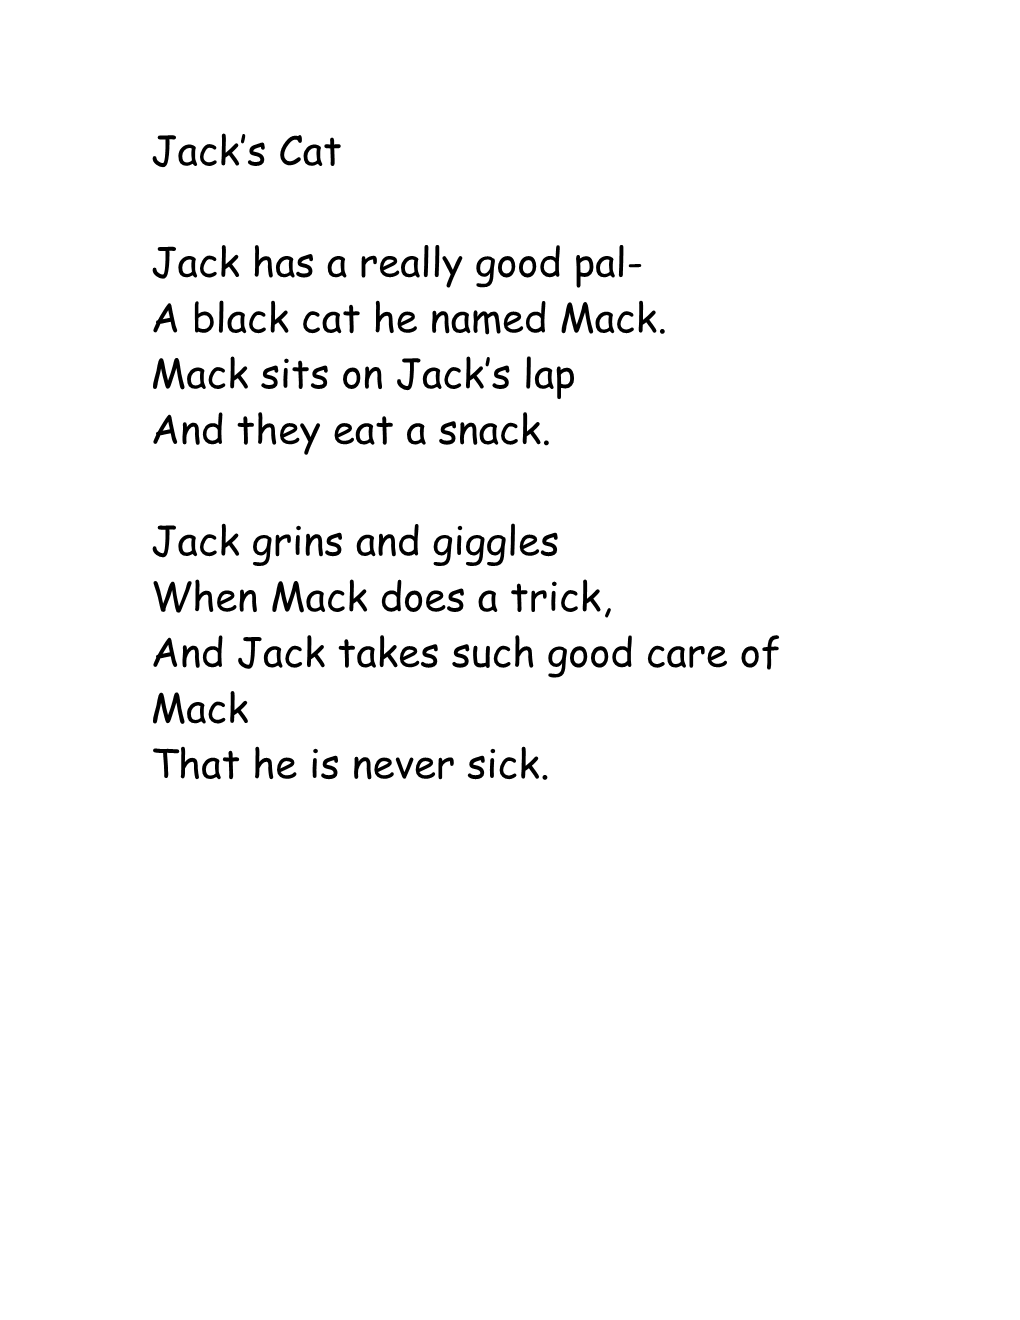 Jack Has a Really Good Pal